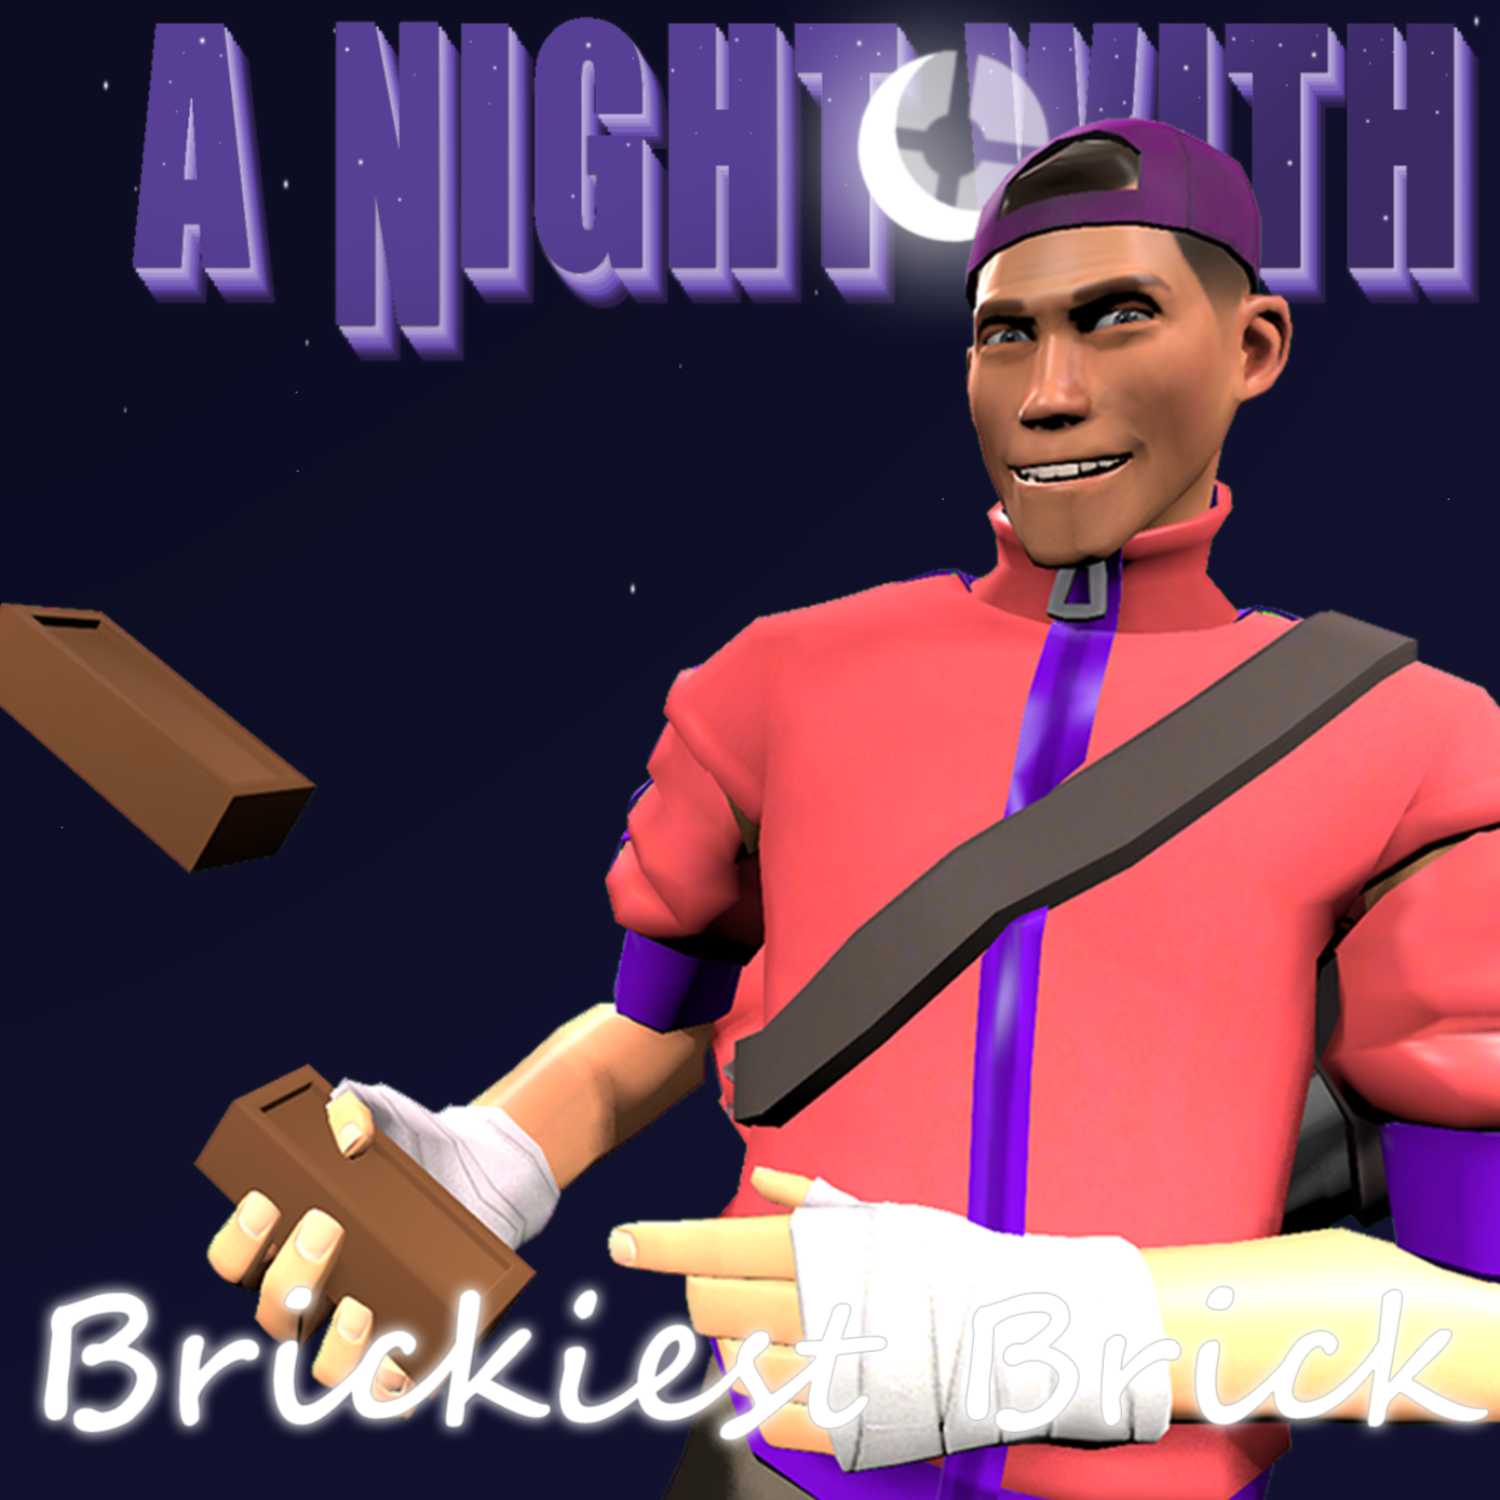 A Night With: Brickiest Brick "The Best Brick Online"